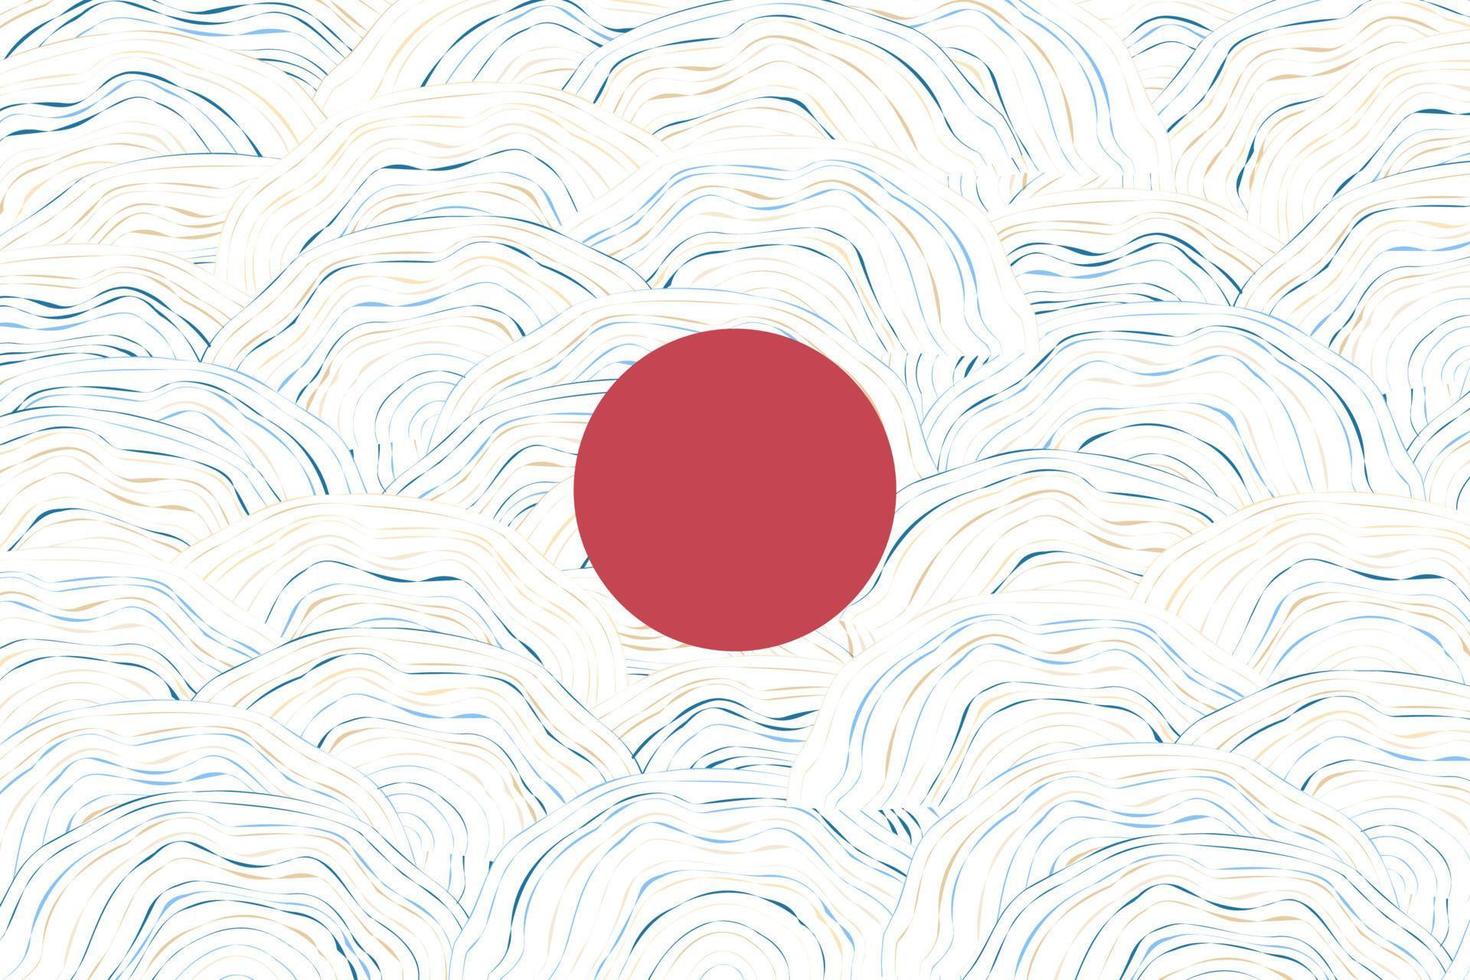 Fluid Japanese ocean wave vector art. Modern asian slide design. Ink drawing texture with marine shape